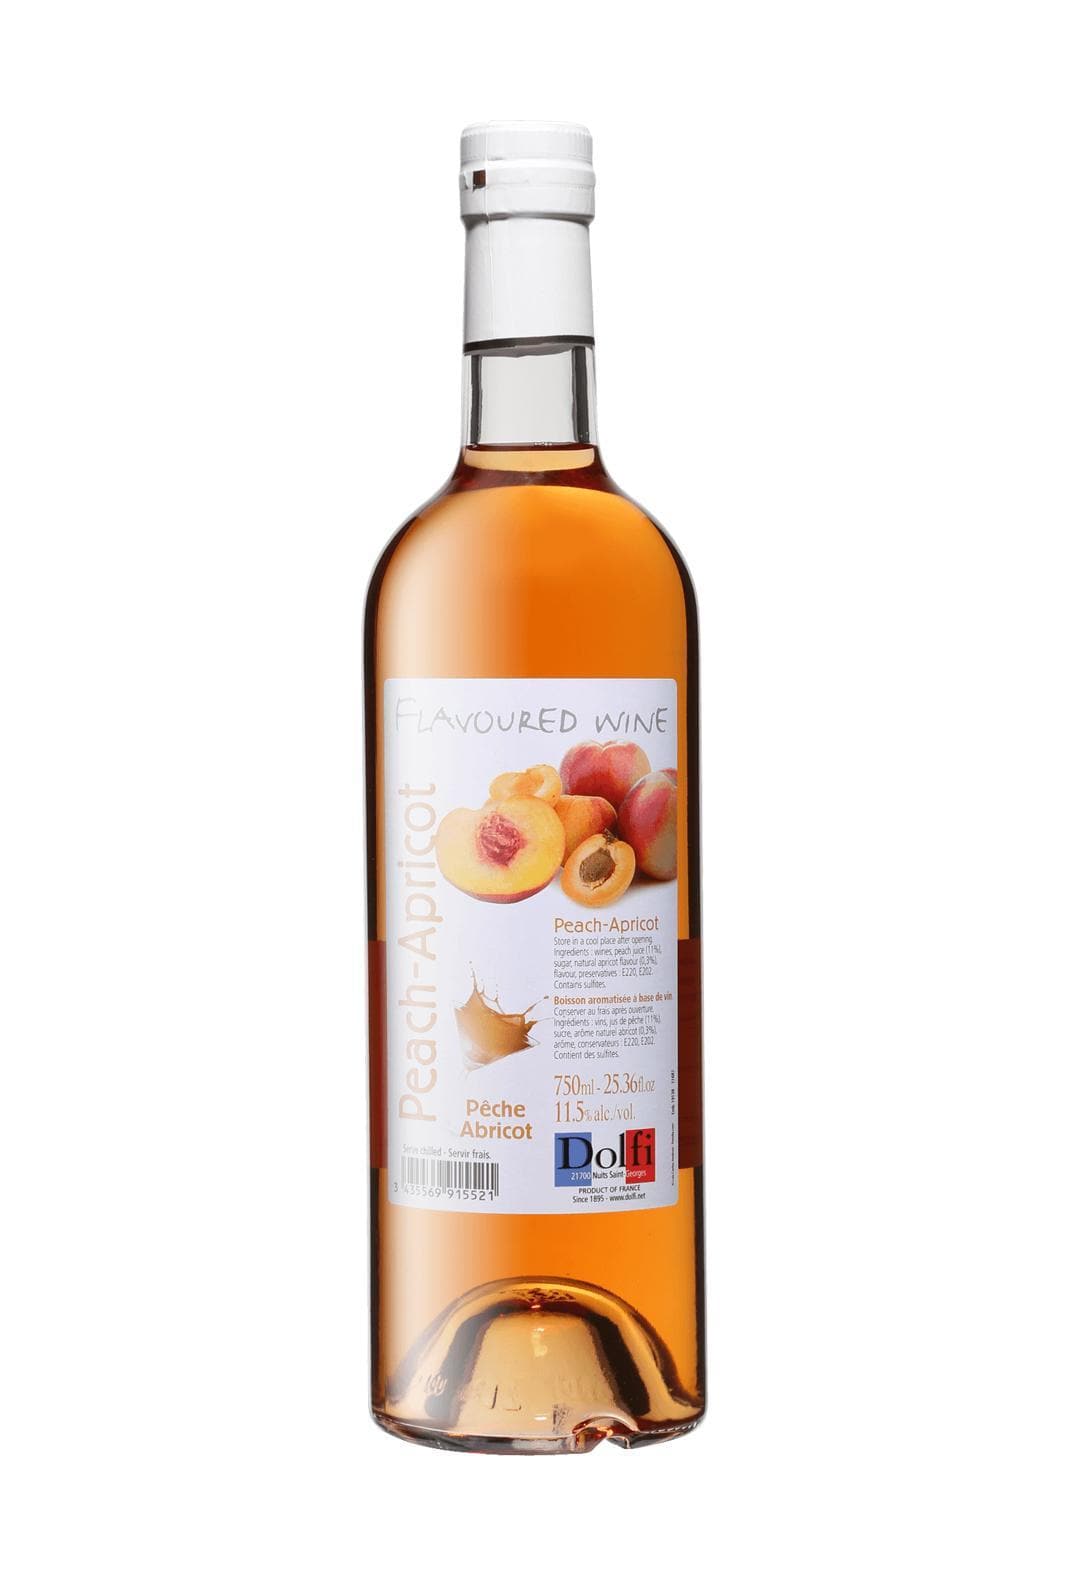 Dolfi Wine Peach-Apricot Flavour 11.5% 750ml | Wine | Shop online at Spirits of France